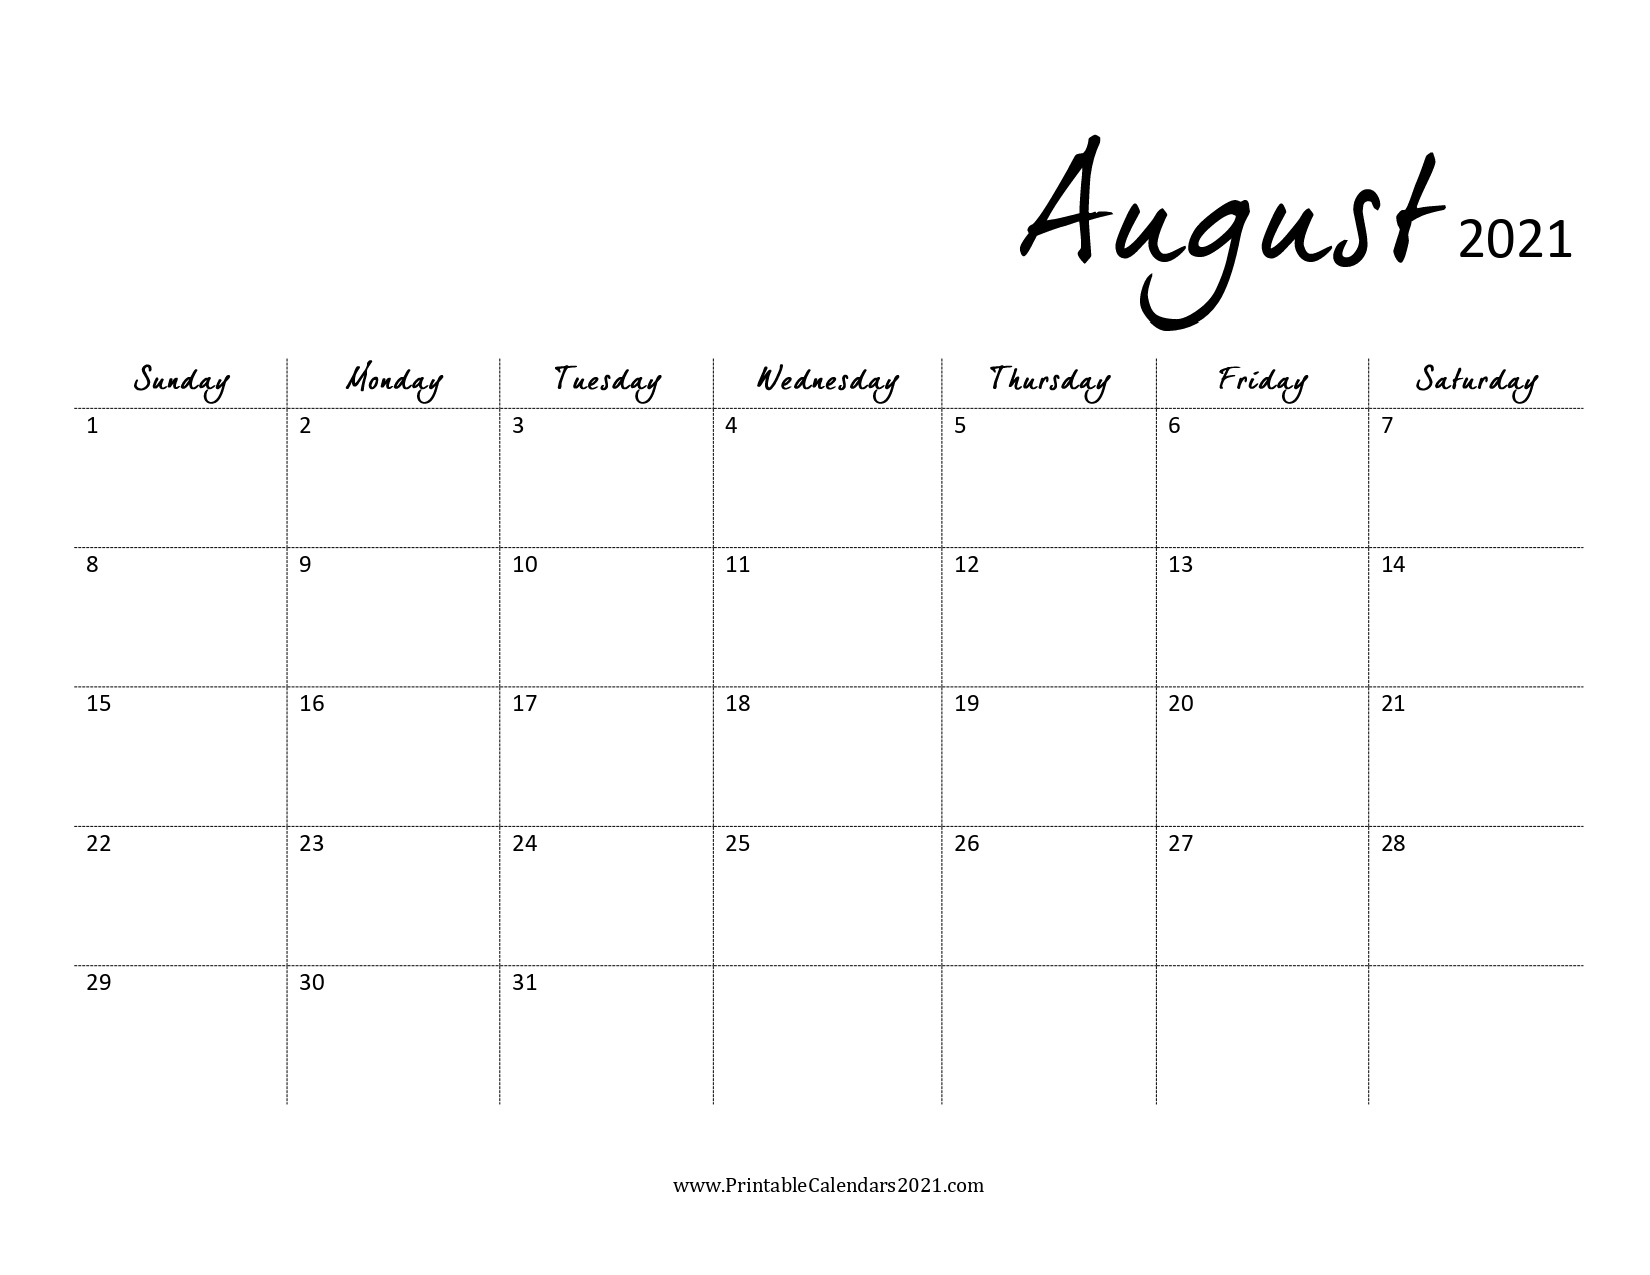 44+ August 2021 Calendar Printable, August 2021 Blank Calendar Pdf August 2021 Calendar Xl